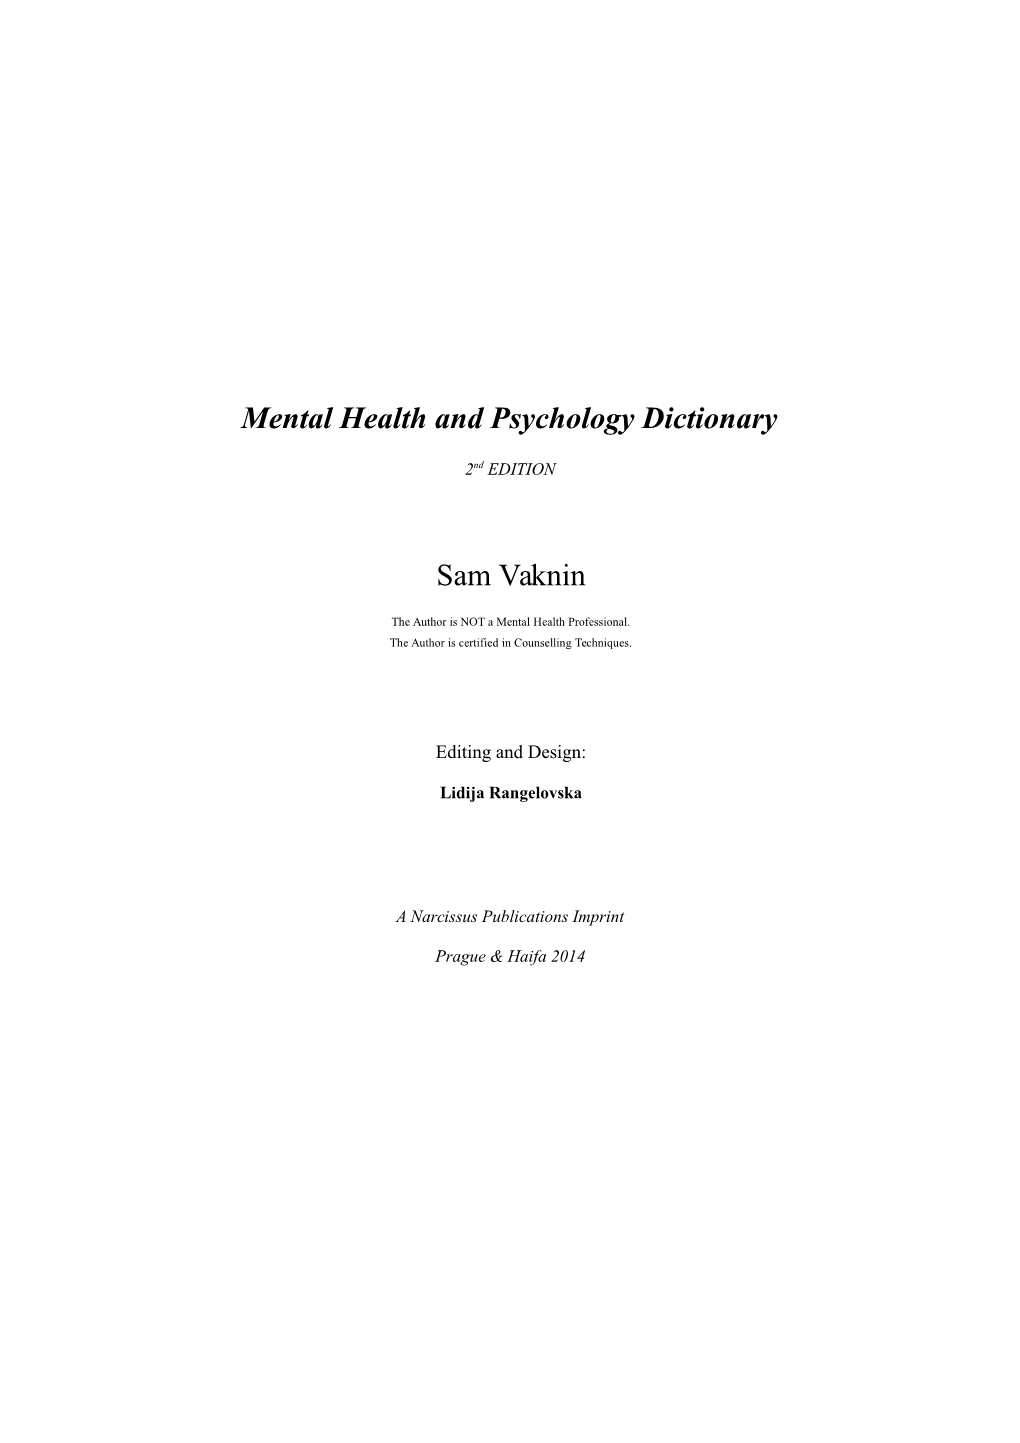 Mental Health and Psychology Dictionary Sam Vaknin